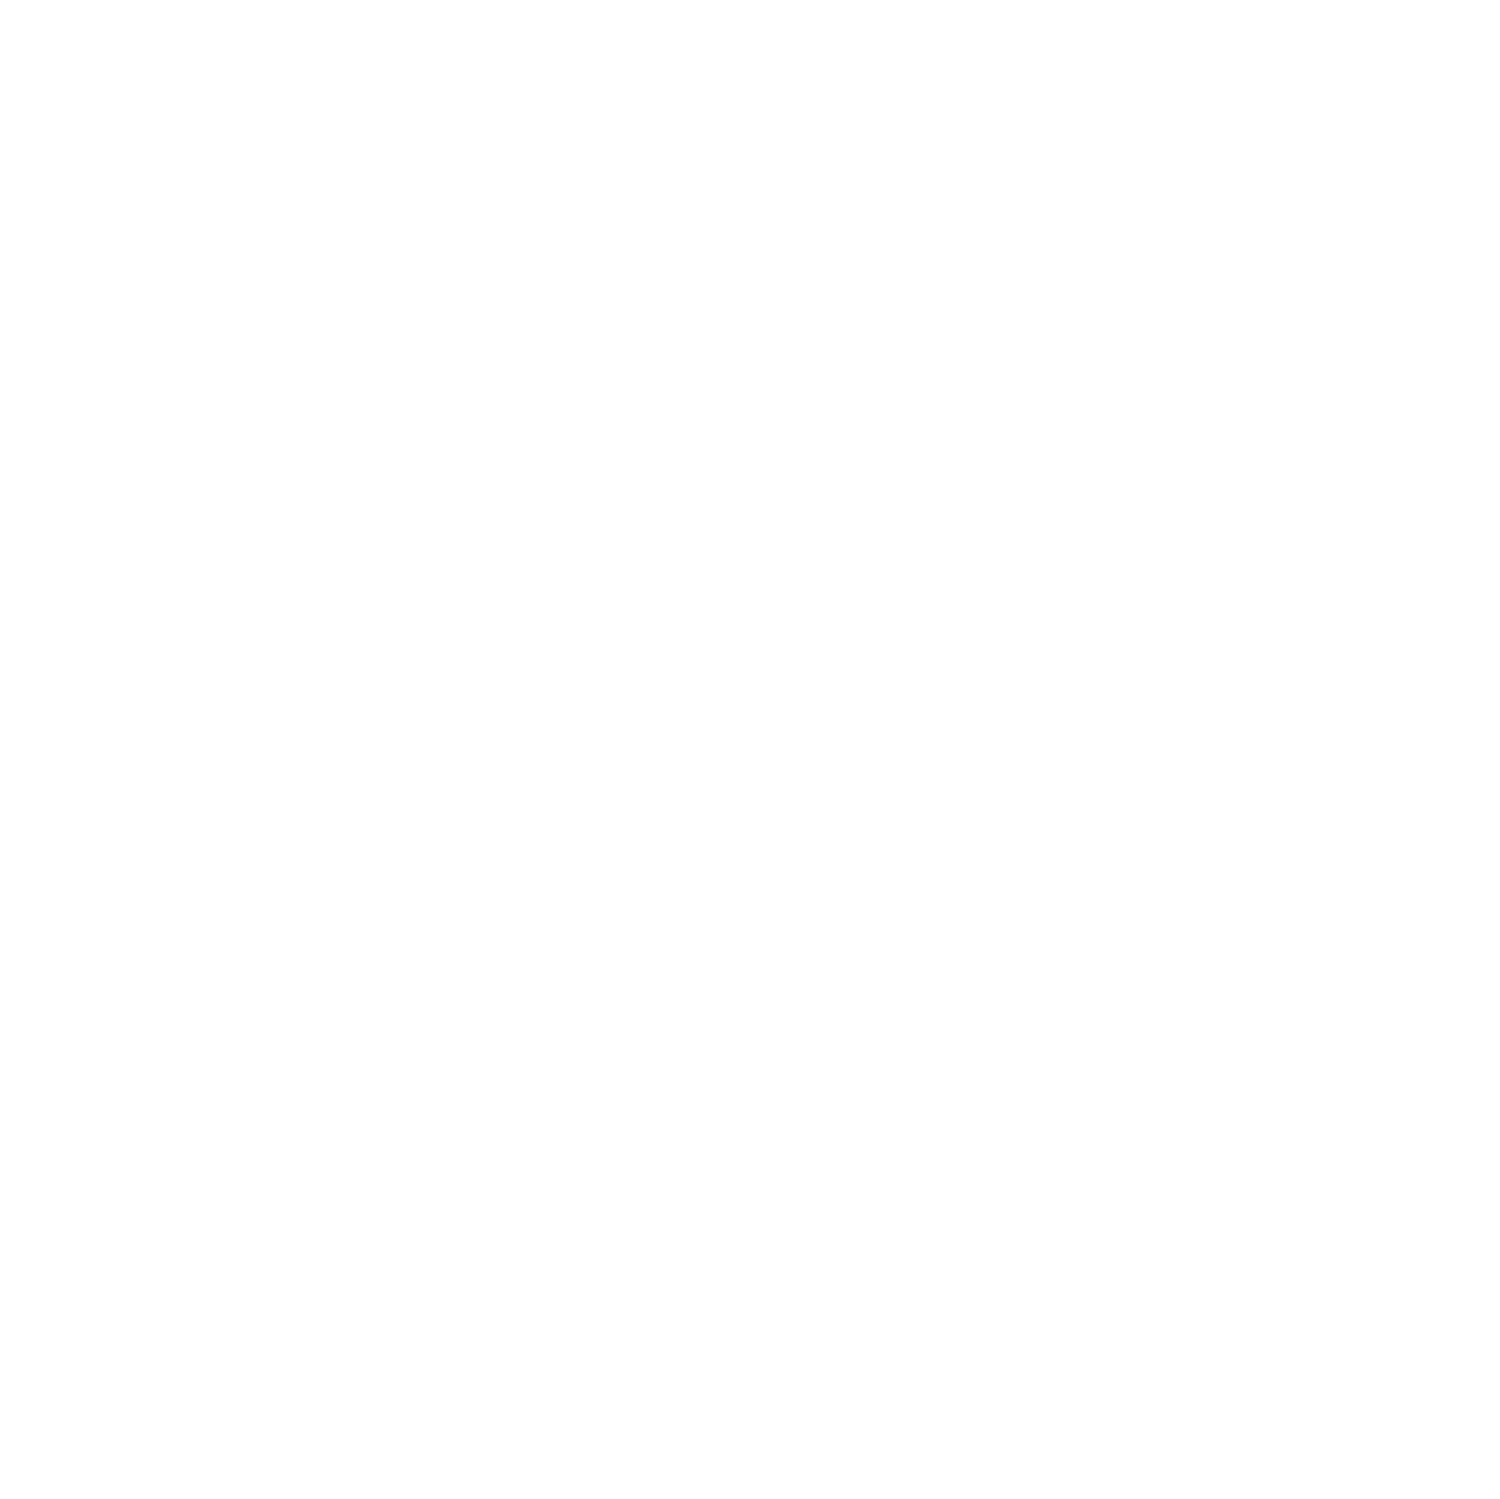 Holy Spirits